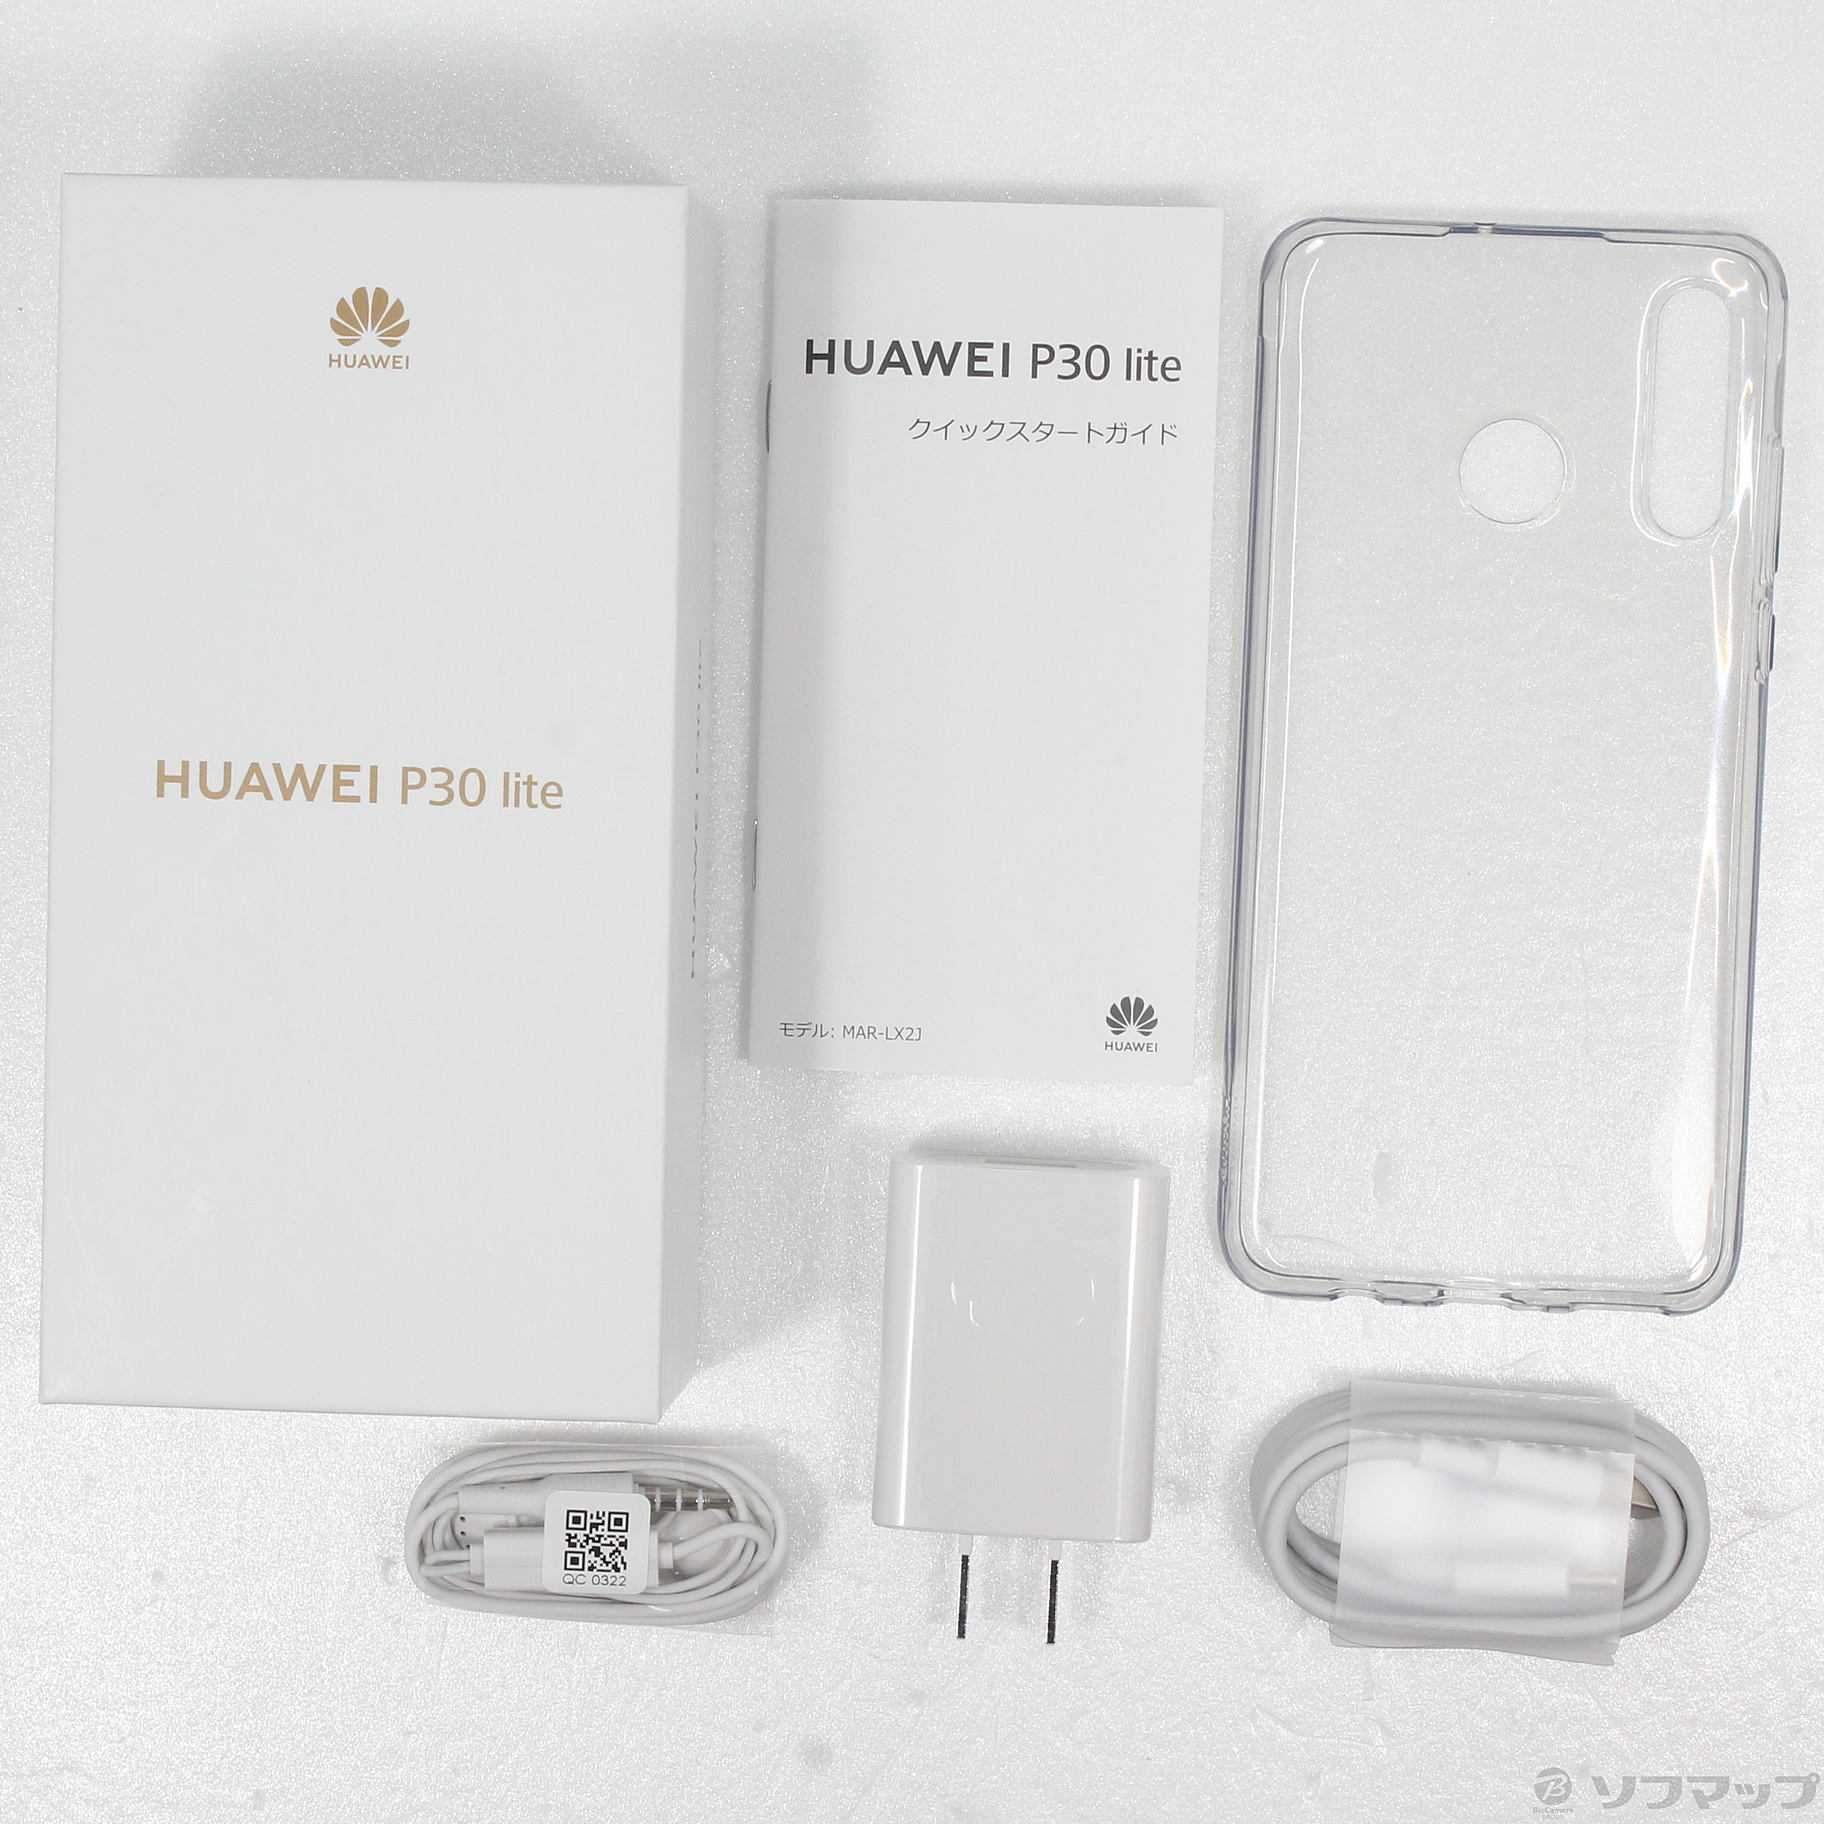 HUAWEI P30 lite パールホワイト 64 GB SIMフリー - スマートフォン本体